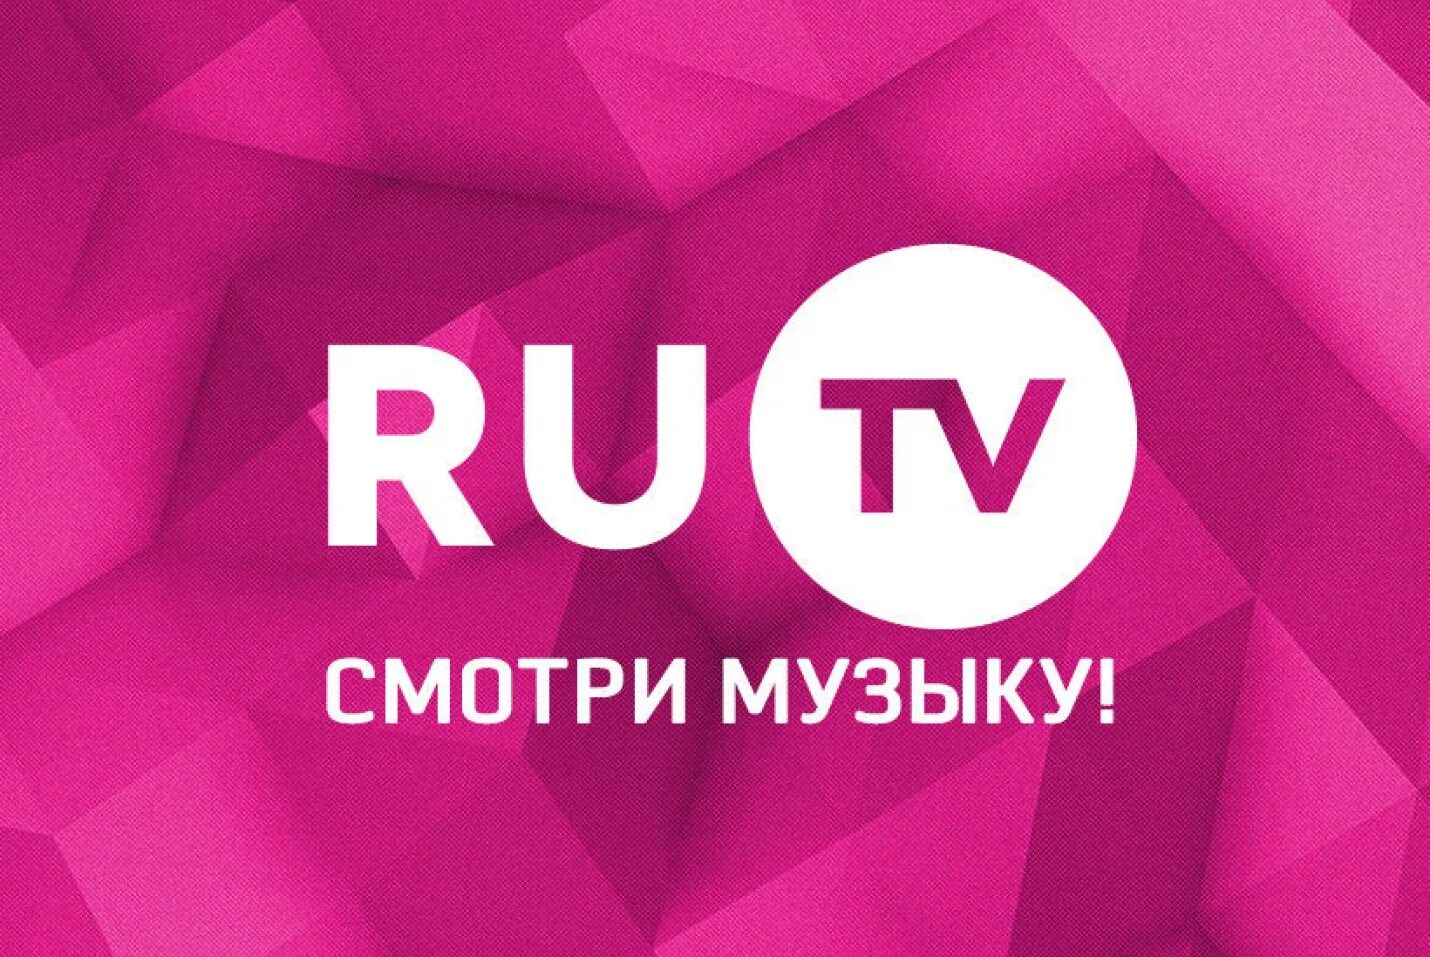 Https ru tv. Ру ТВ. Логотип канала ru TV. Канал ру ТВ. Ру ТВ музыкальный канал.